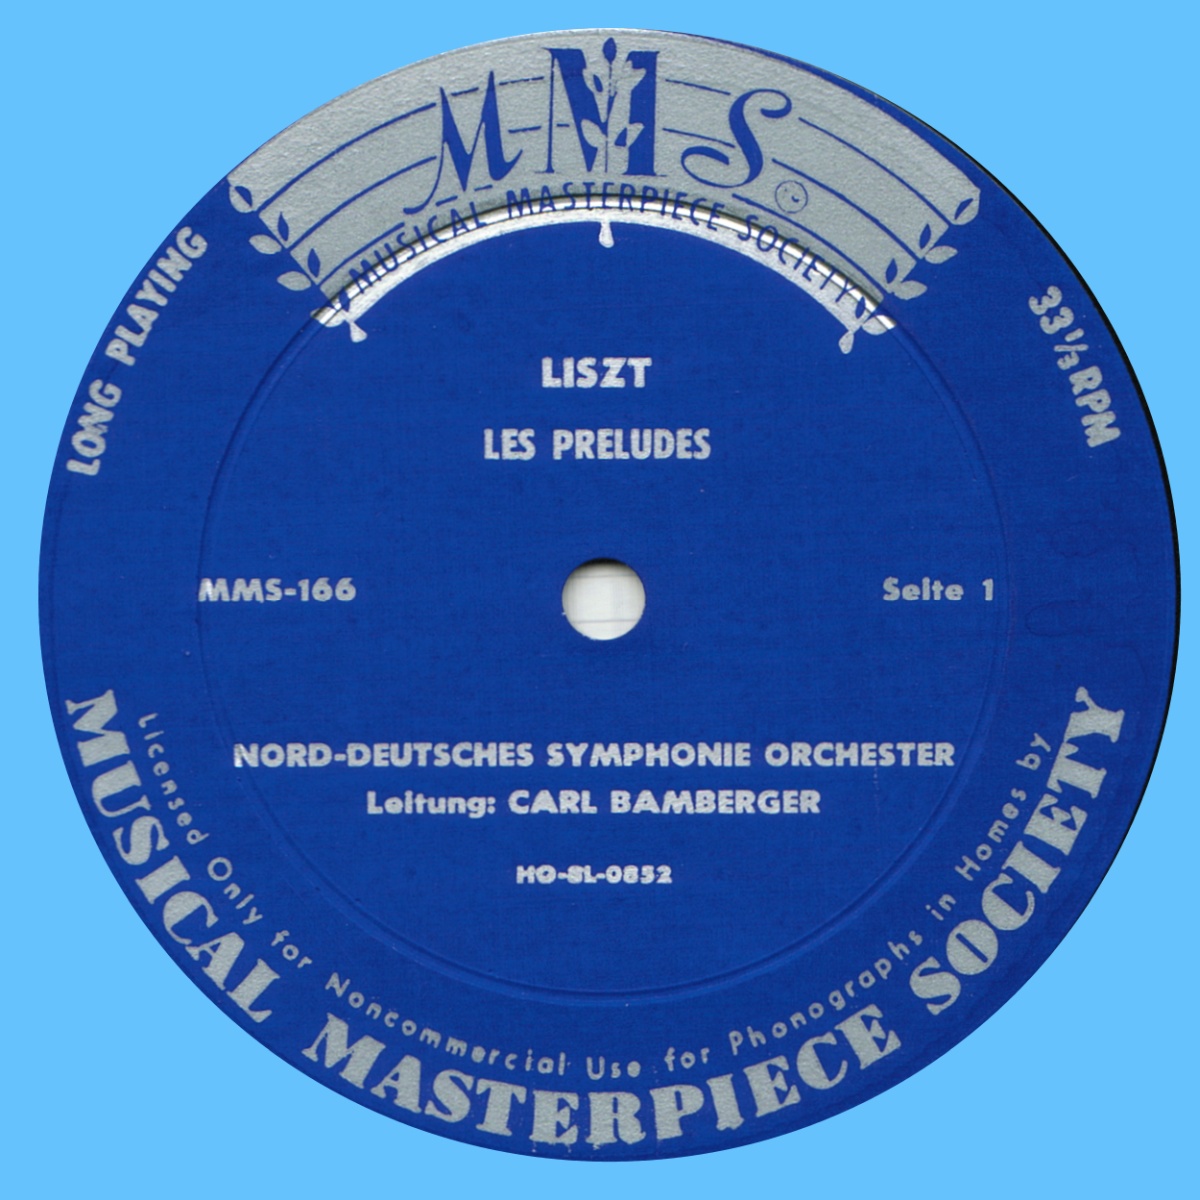 Musical Masterpiece Society» MMS 166, Étiquette du disque recto